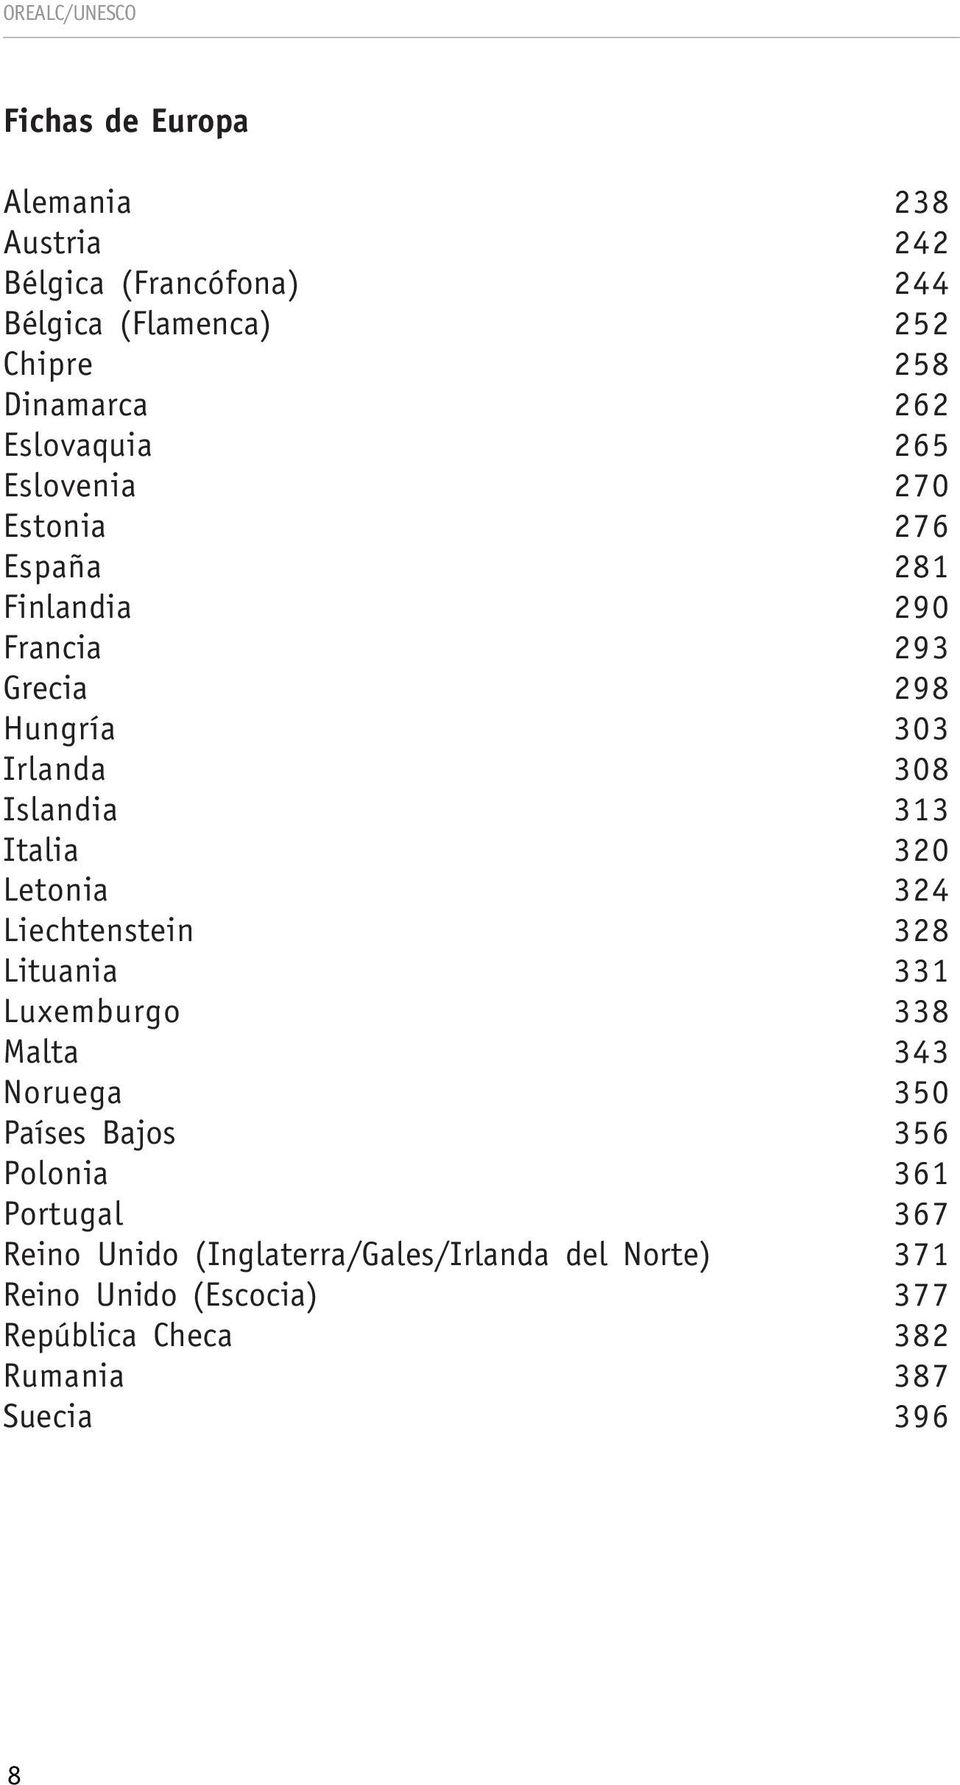 313 Italia 320 Letonia 324 Liechtenstein 328 Lituania 331 Luxemburgo 338 Malta 343 Noruega 350 Países Bajos 356 Polonia 361